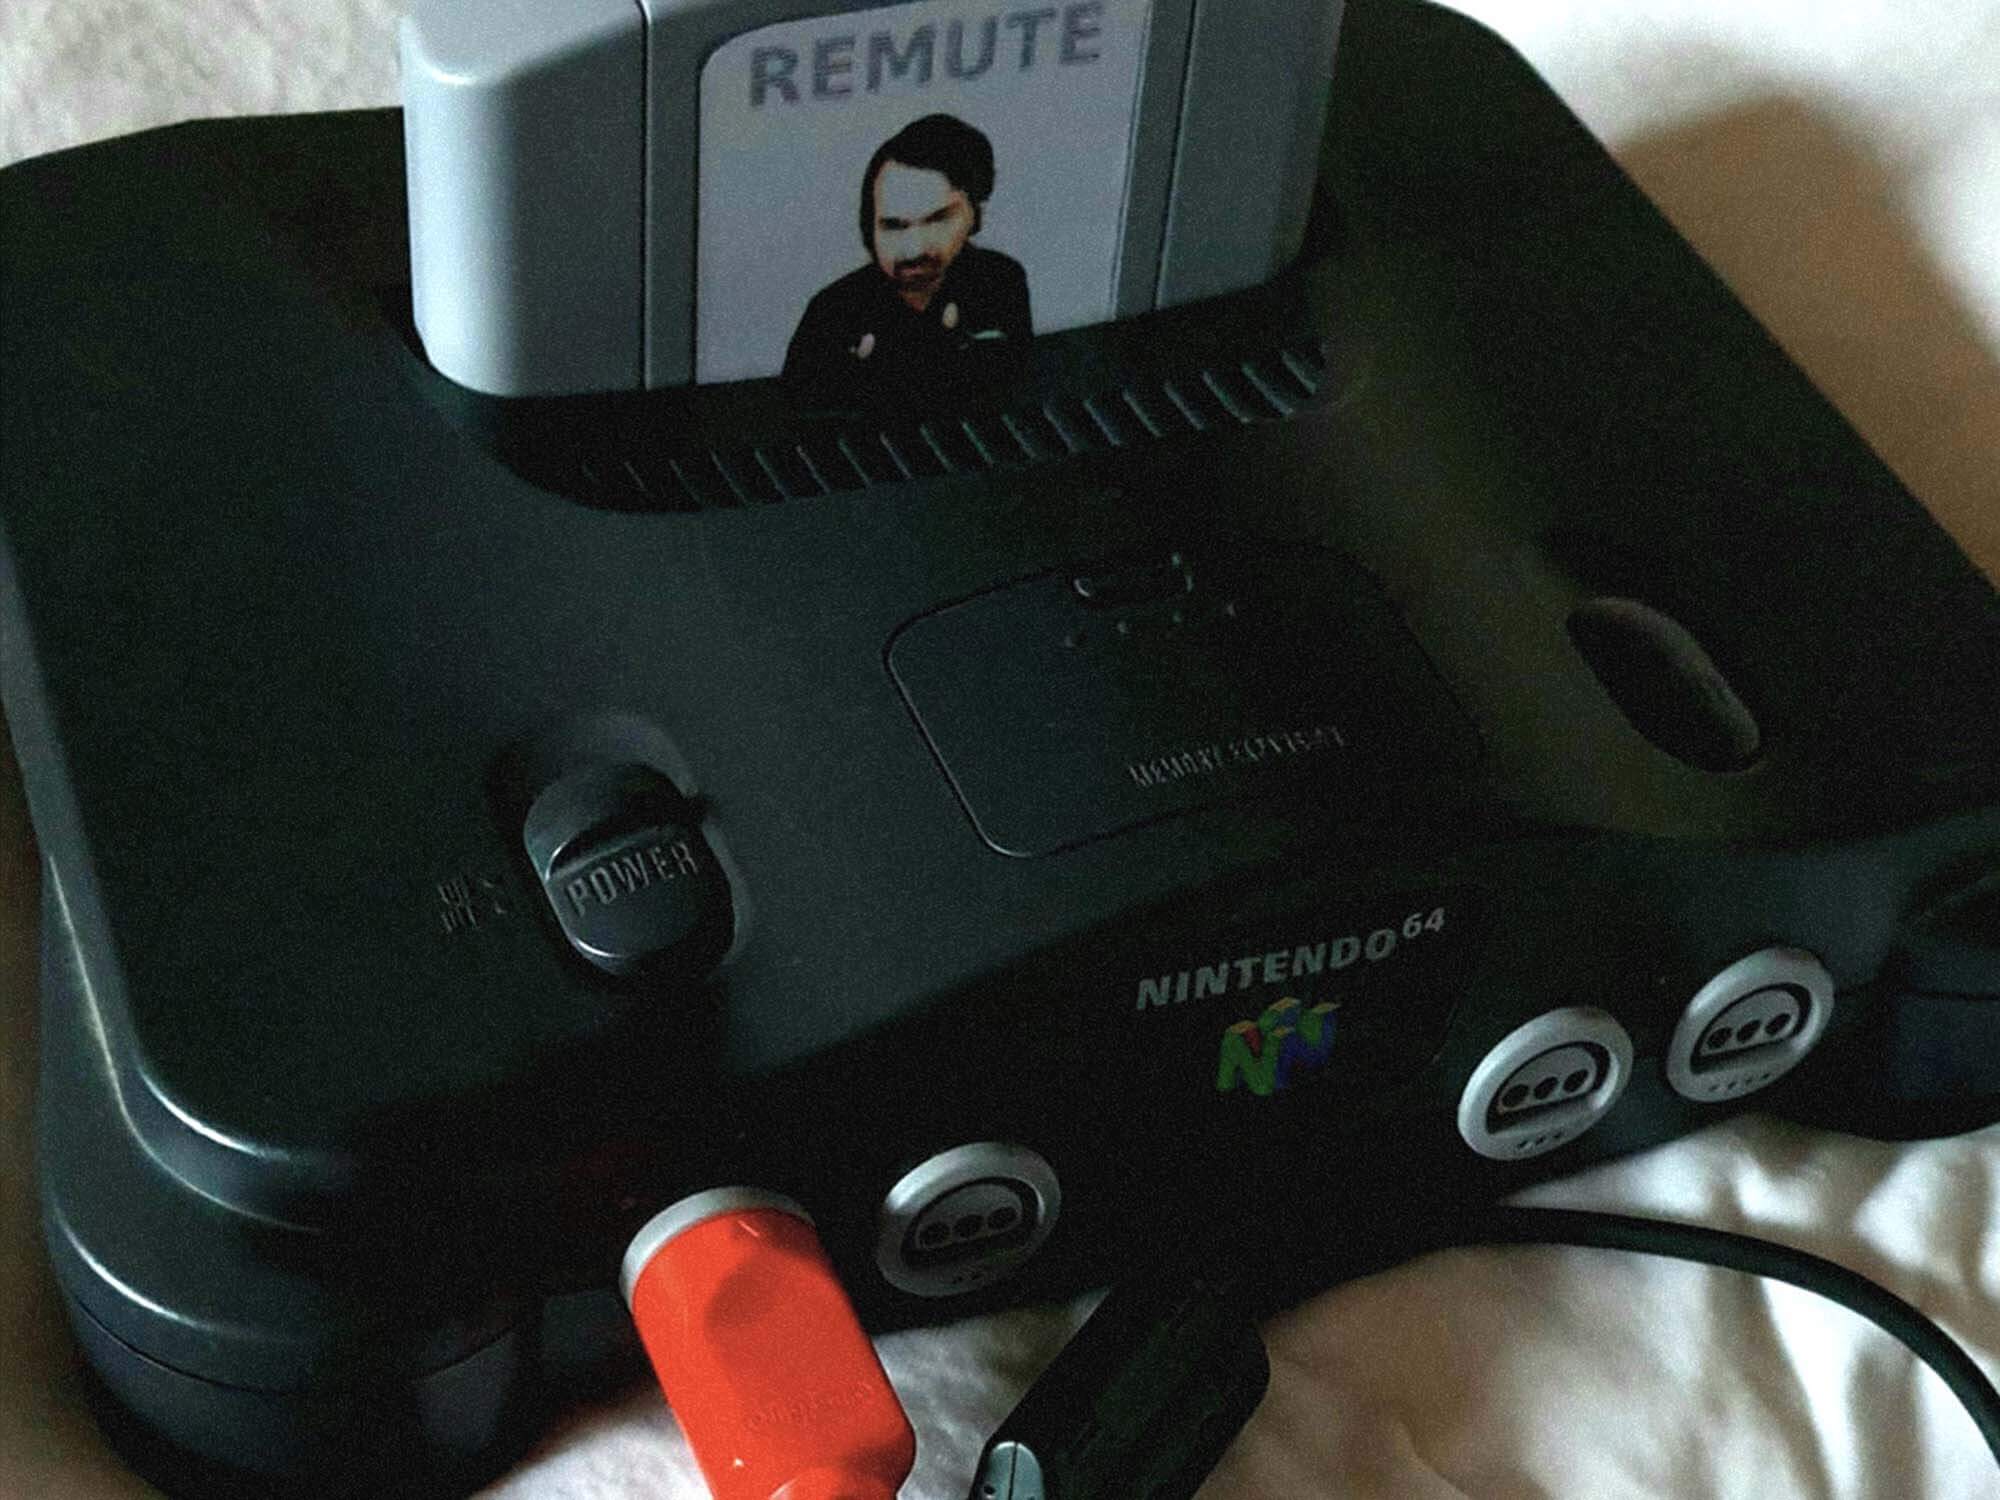 Remute's 'R64' in a Nintendo 64